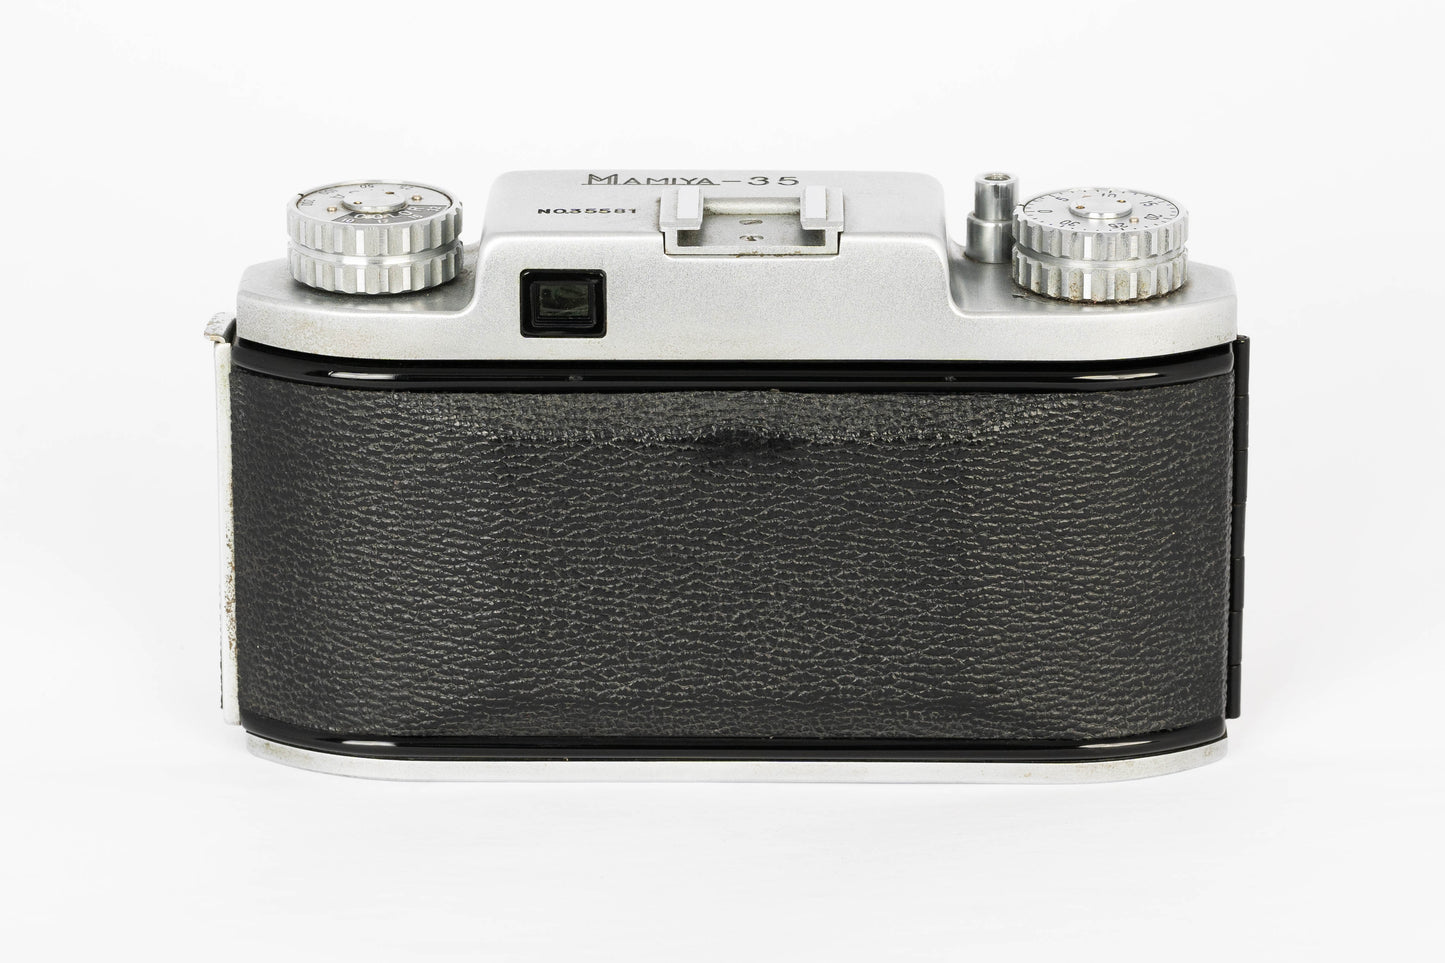 Mamiya-35 Rangefinder Film Camera w/ Sekor S 4.5cm f/3.5 Japan